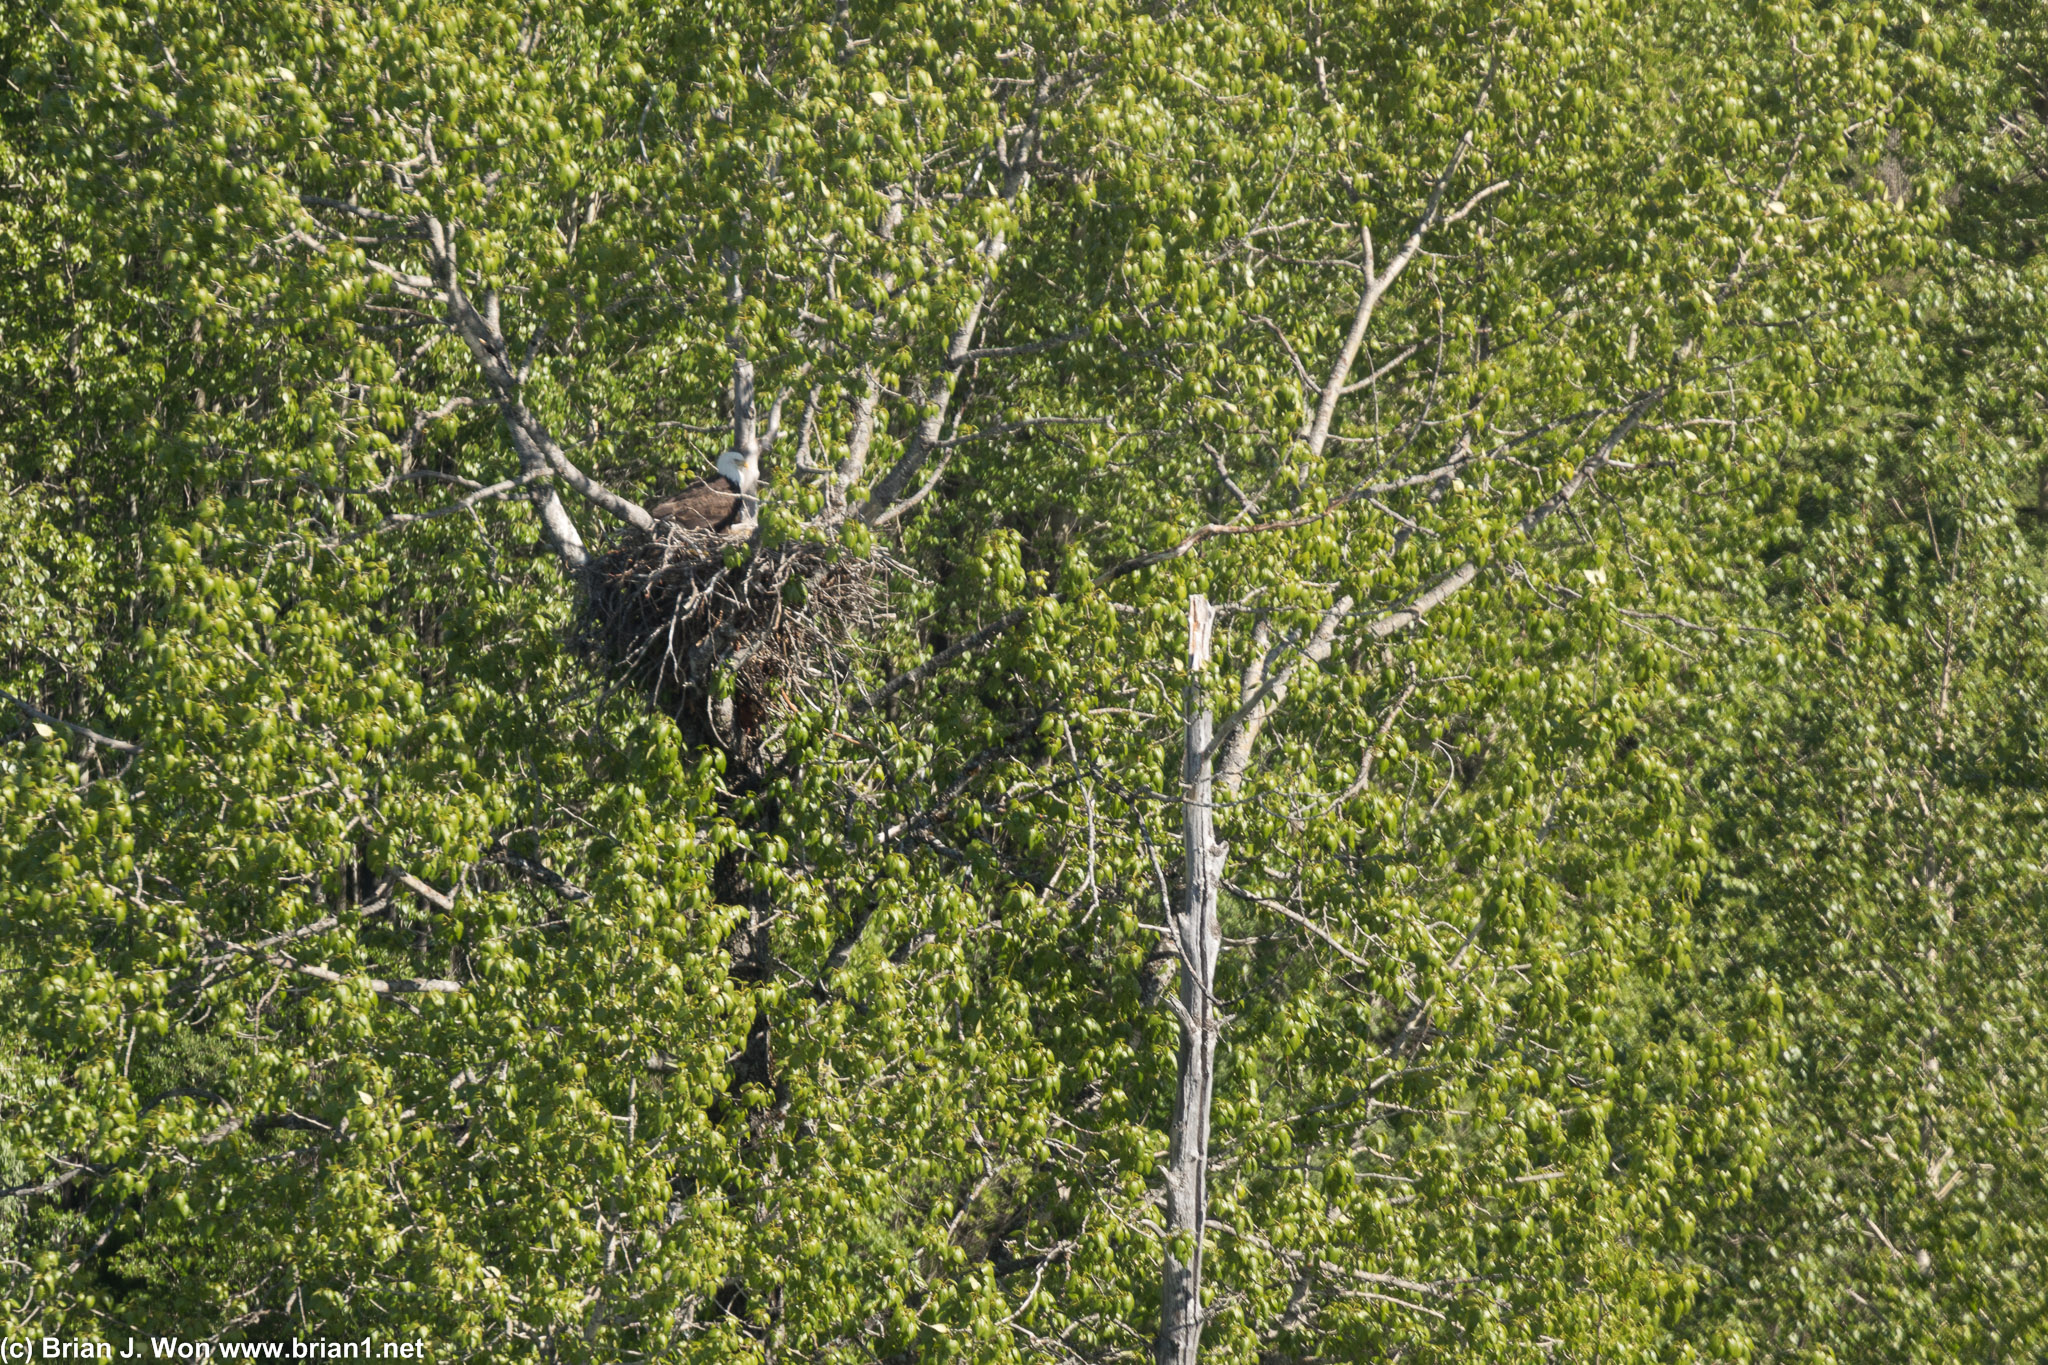 Found a bald eagle nest!